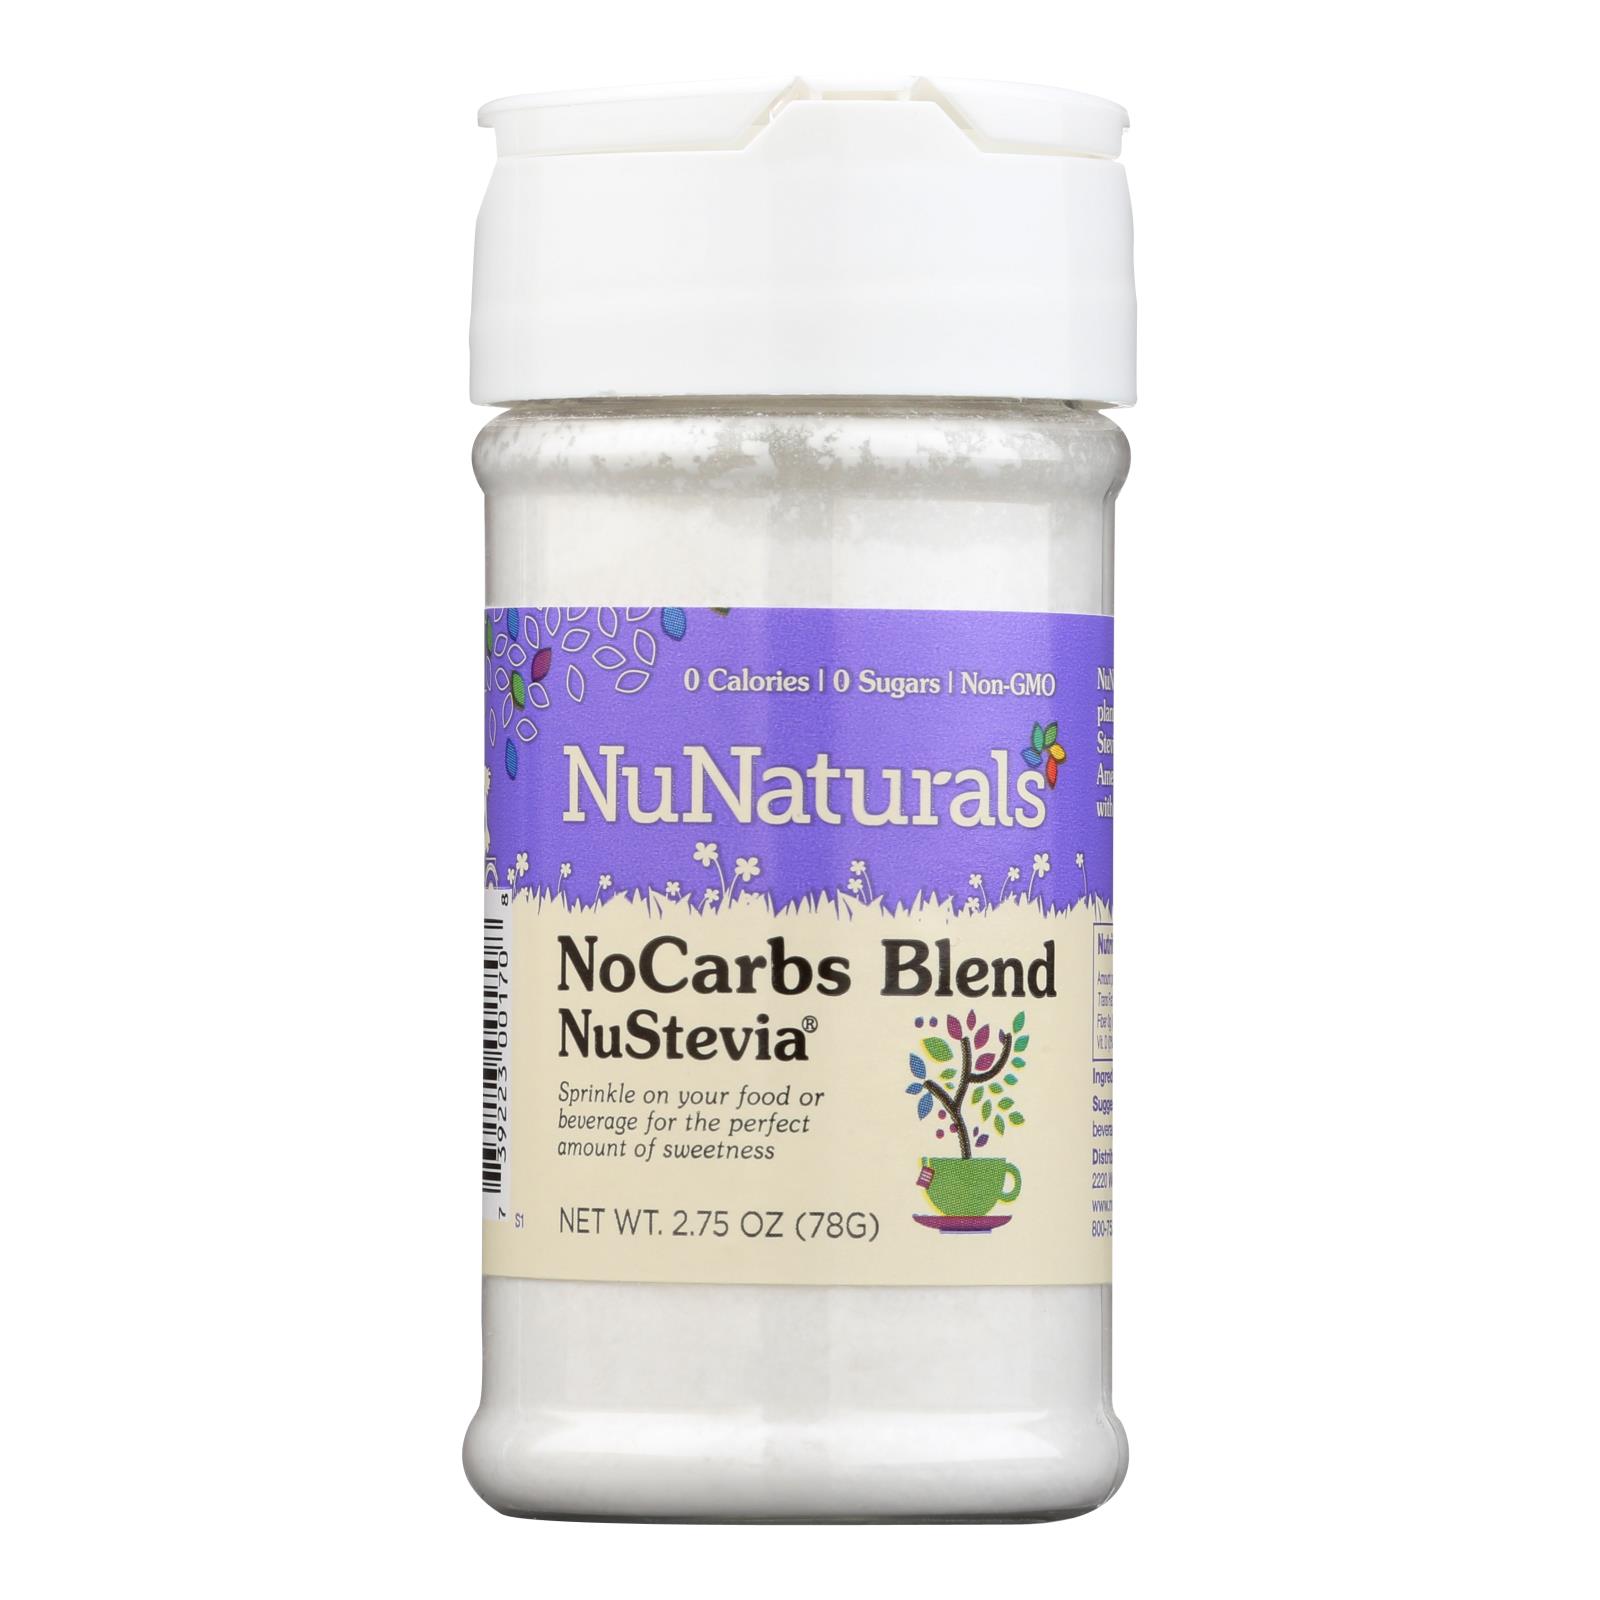 Nunaturals Nocarbs Blend Nustevia - 1 Each - 2.75 OZ